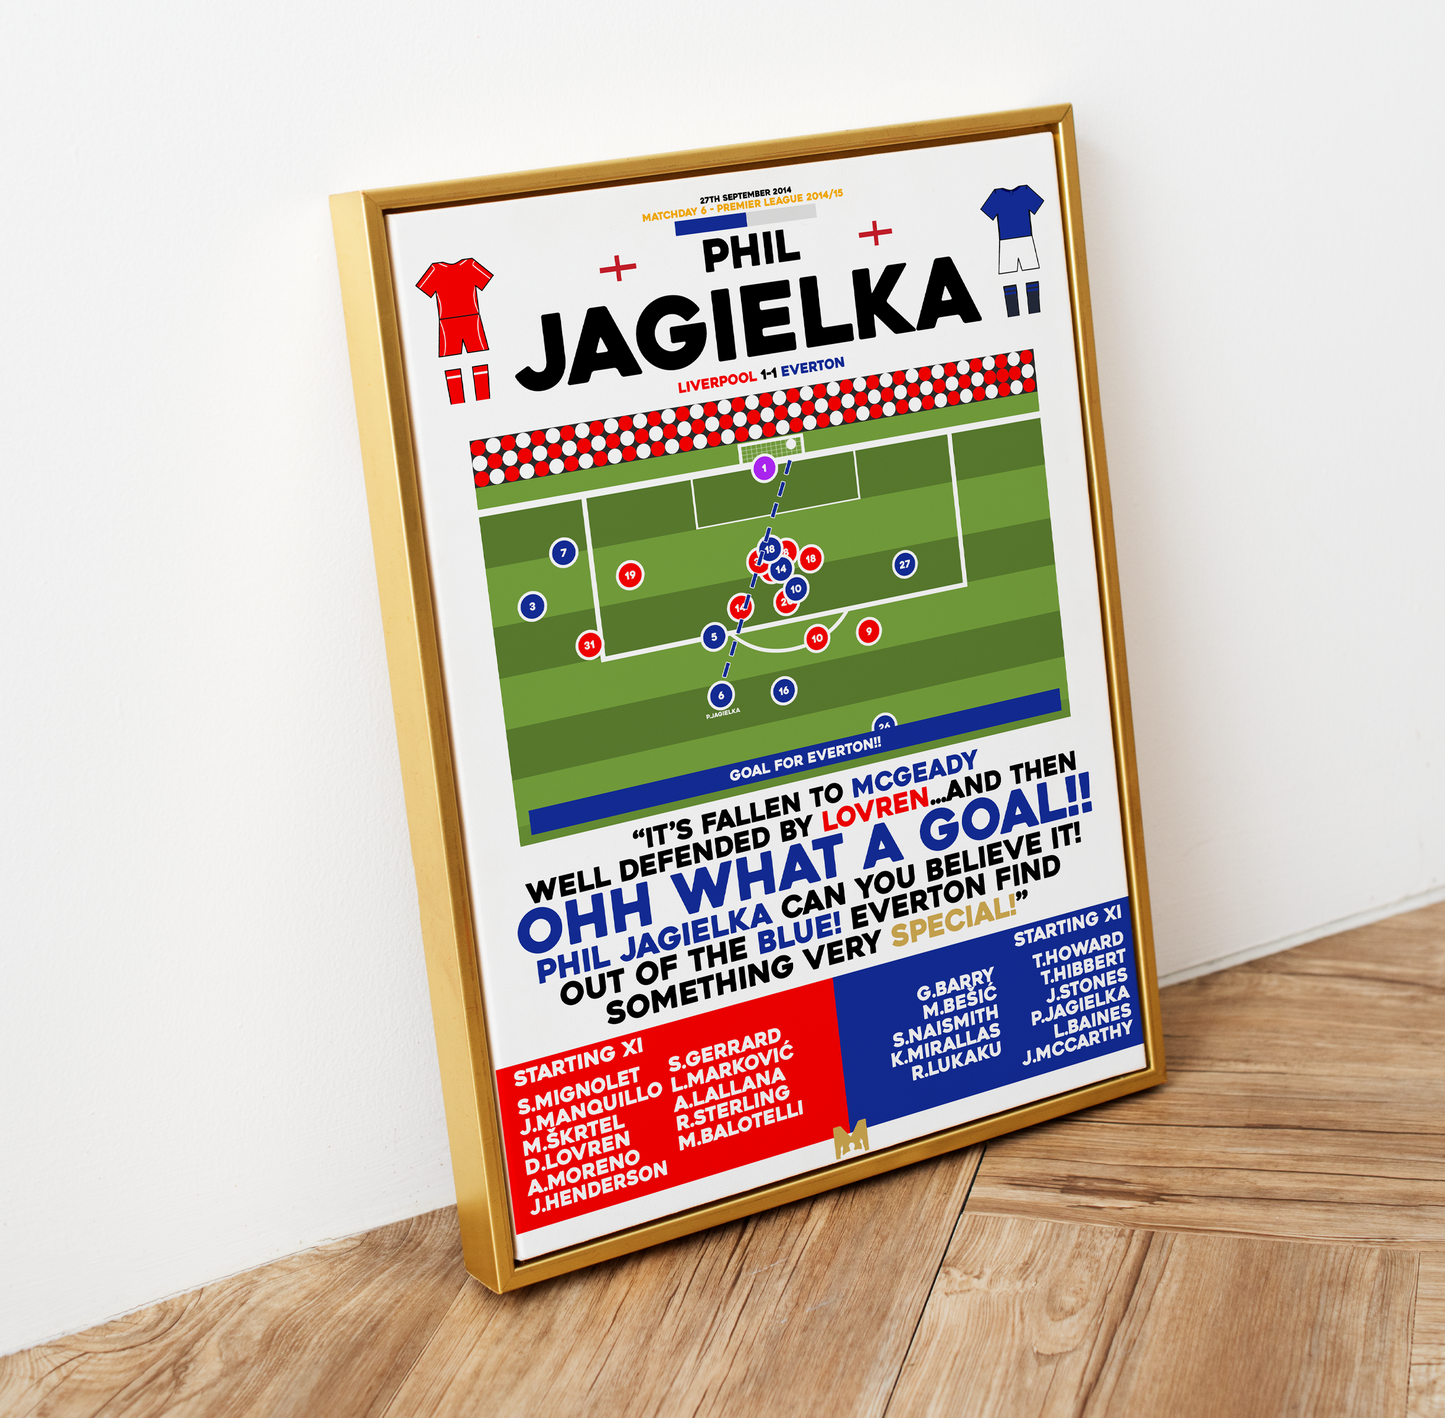 Phil Jagielka Goal vs Liverpool - Premier League 2014/15 - Everton